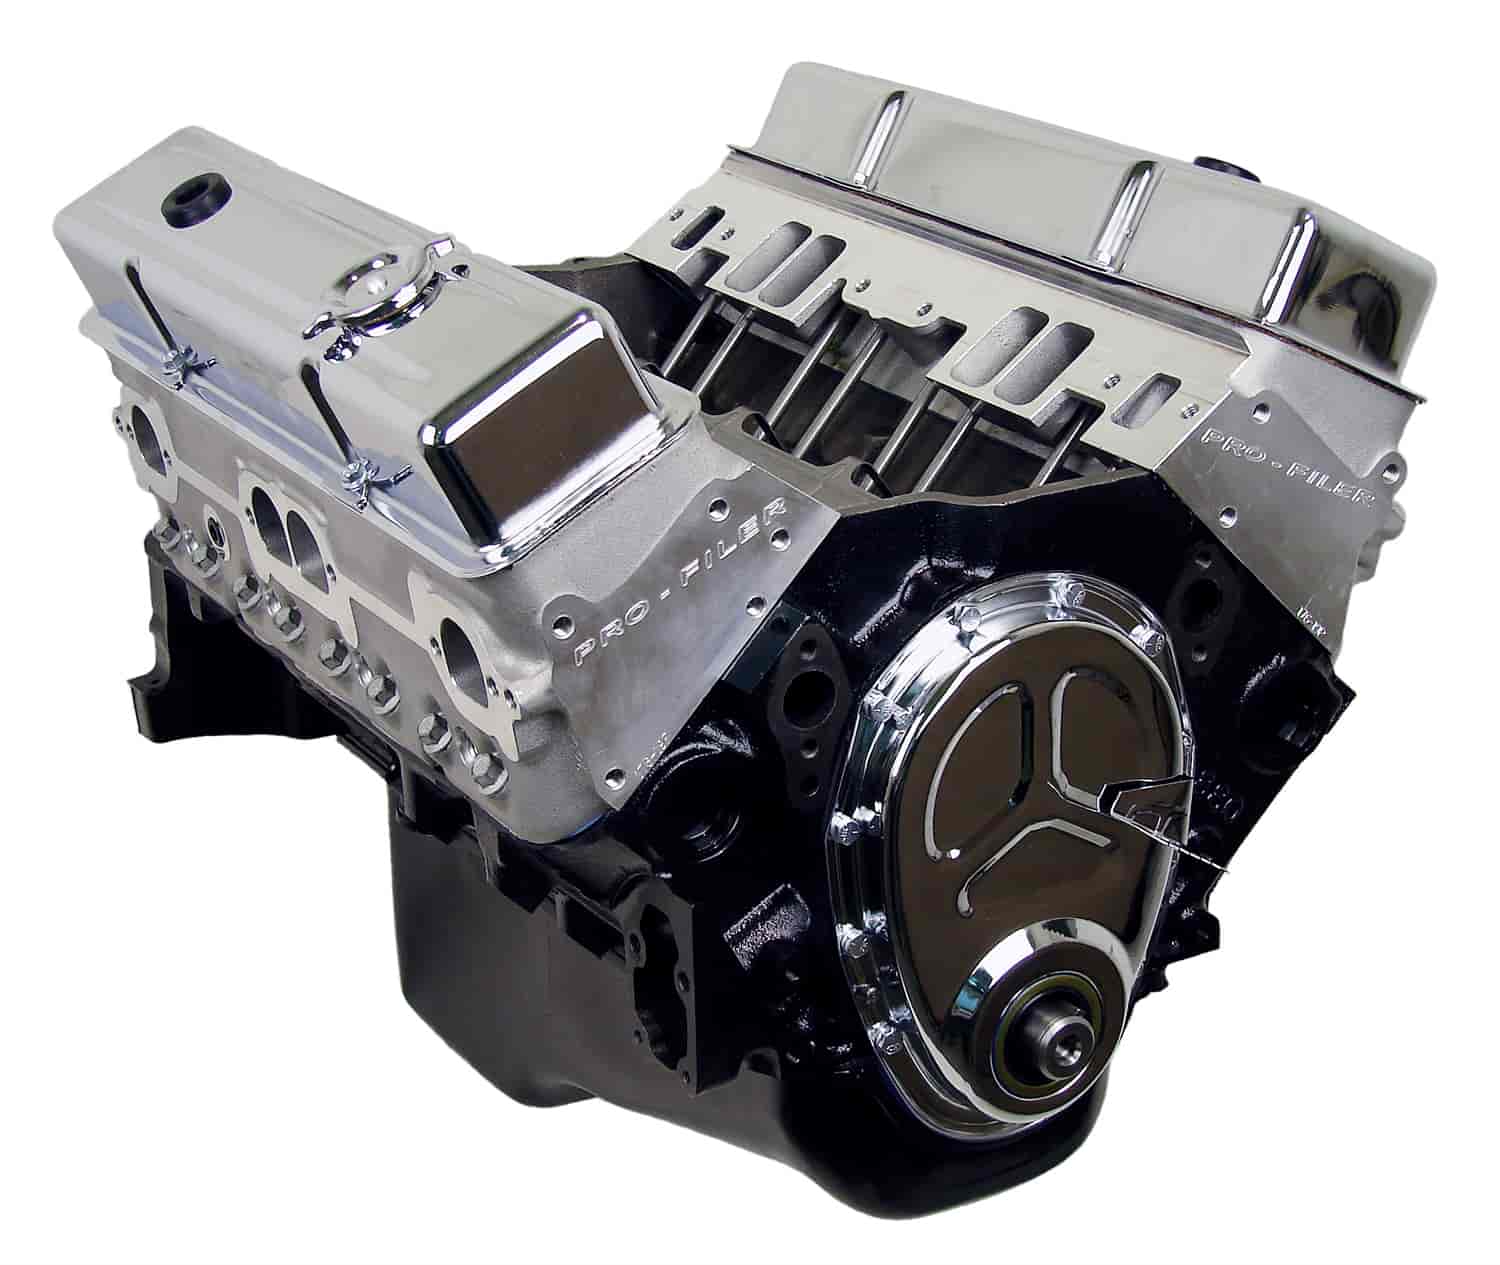 High Performance Crate Engine Small Block Chevy 350ci / 365HP / 400TQ